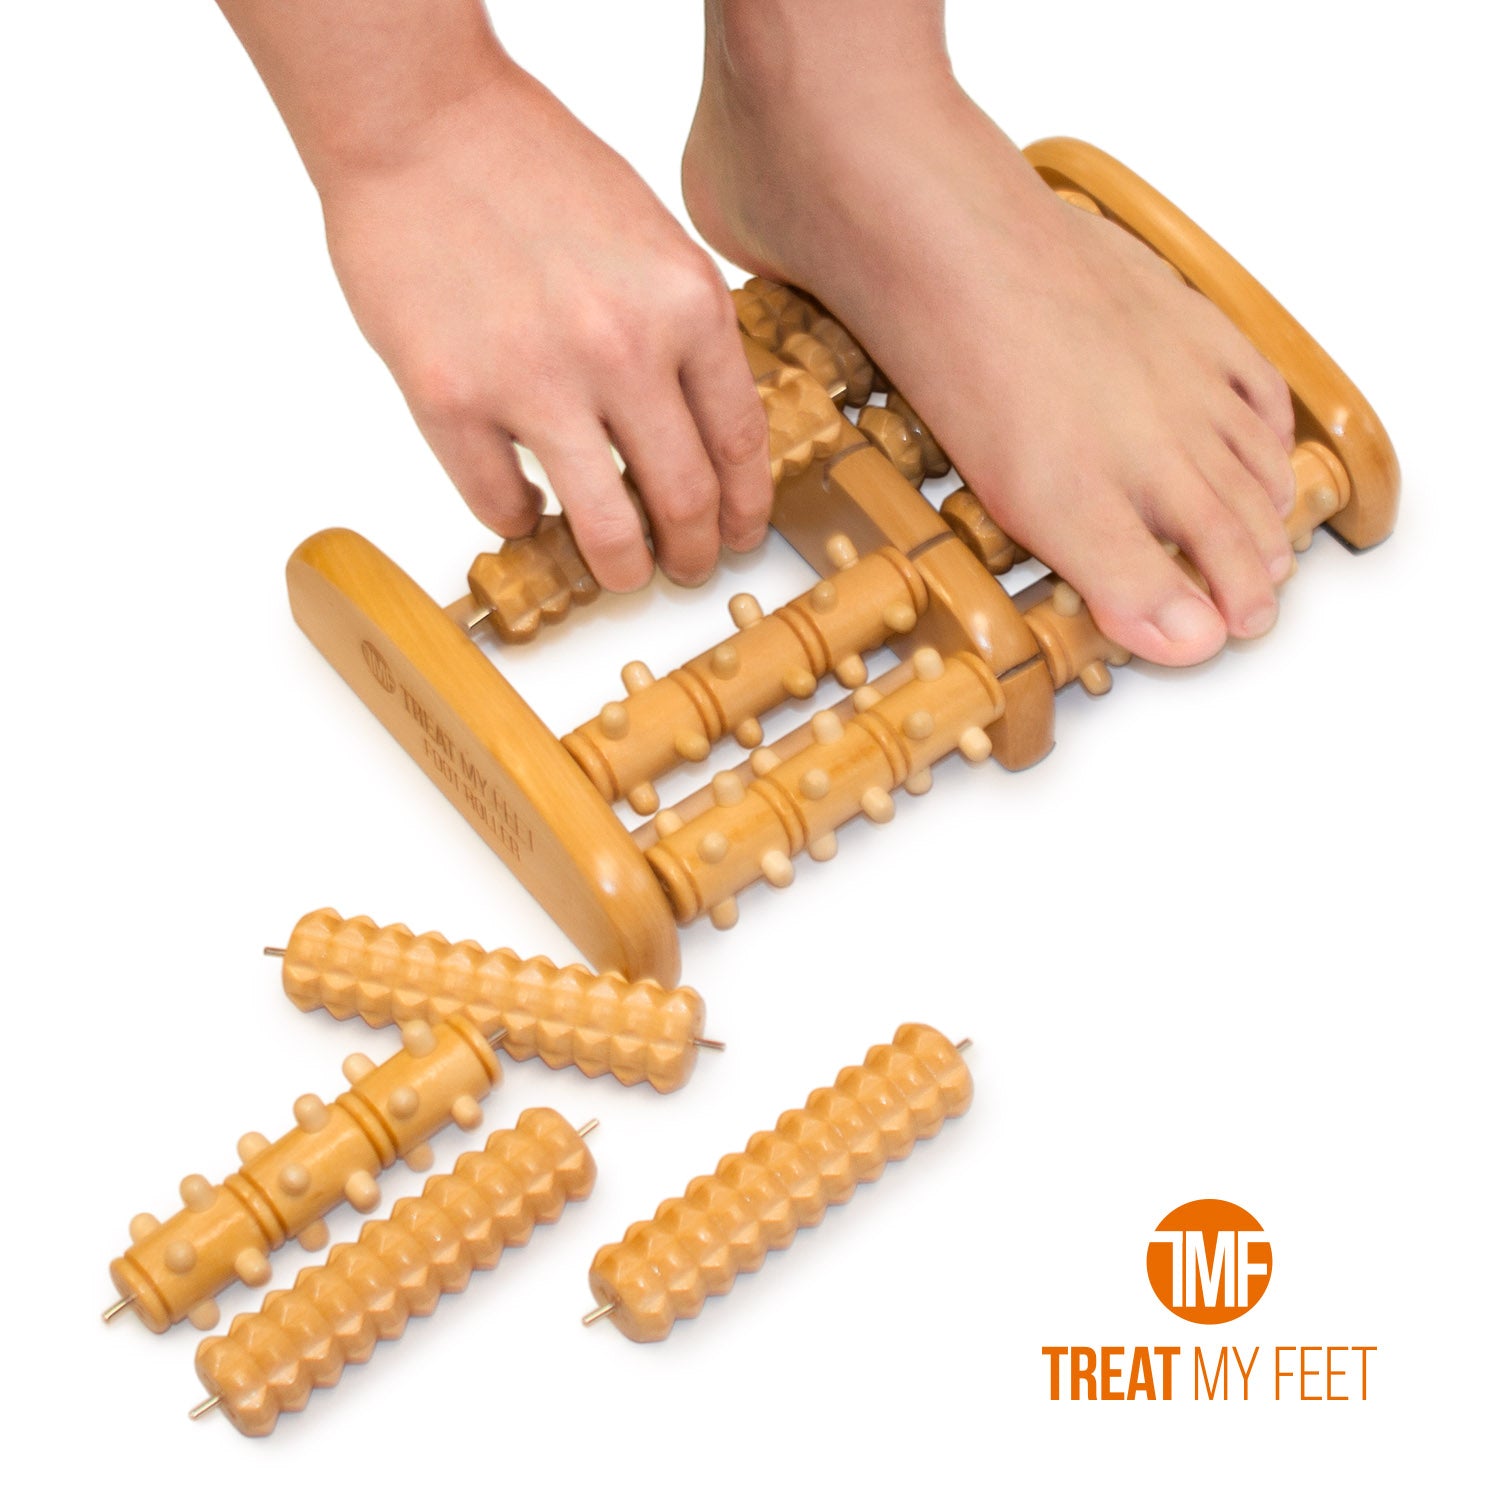 Customizable Foot Massager Roller for Heel Pain, Edema, Plantar Fasciitis, Sore Feet Relief